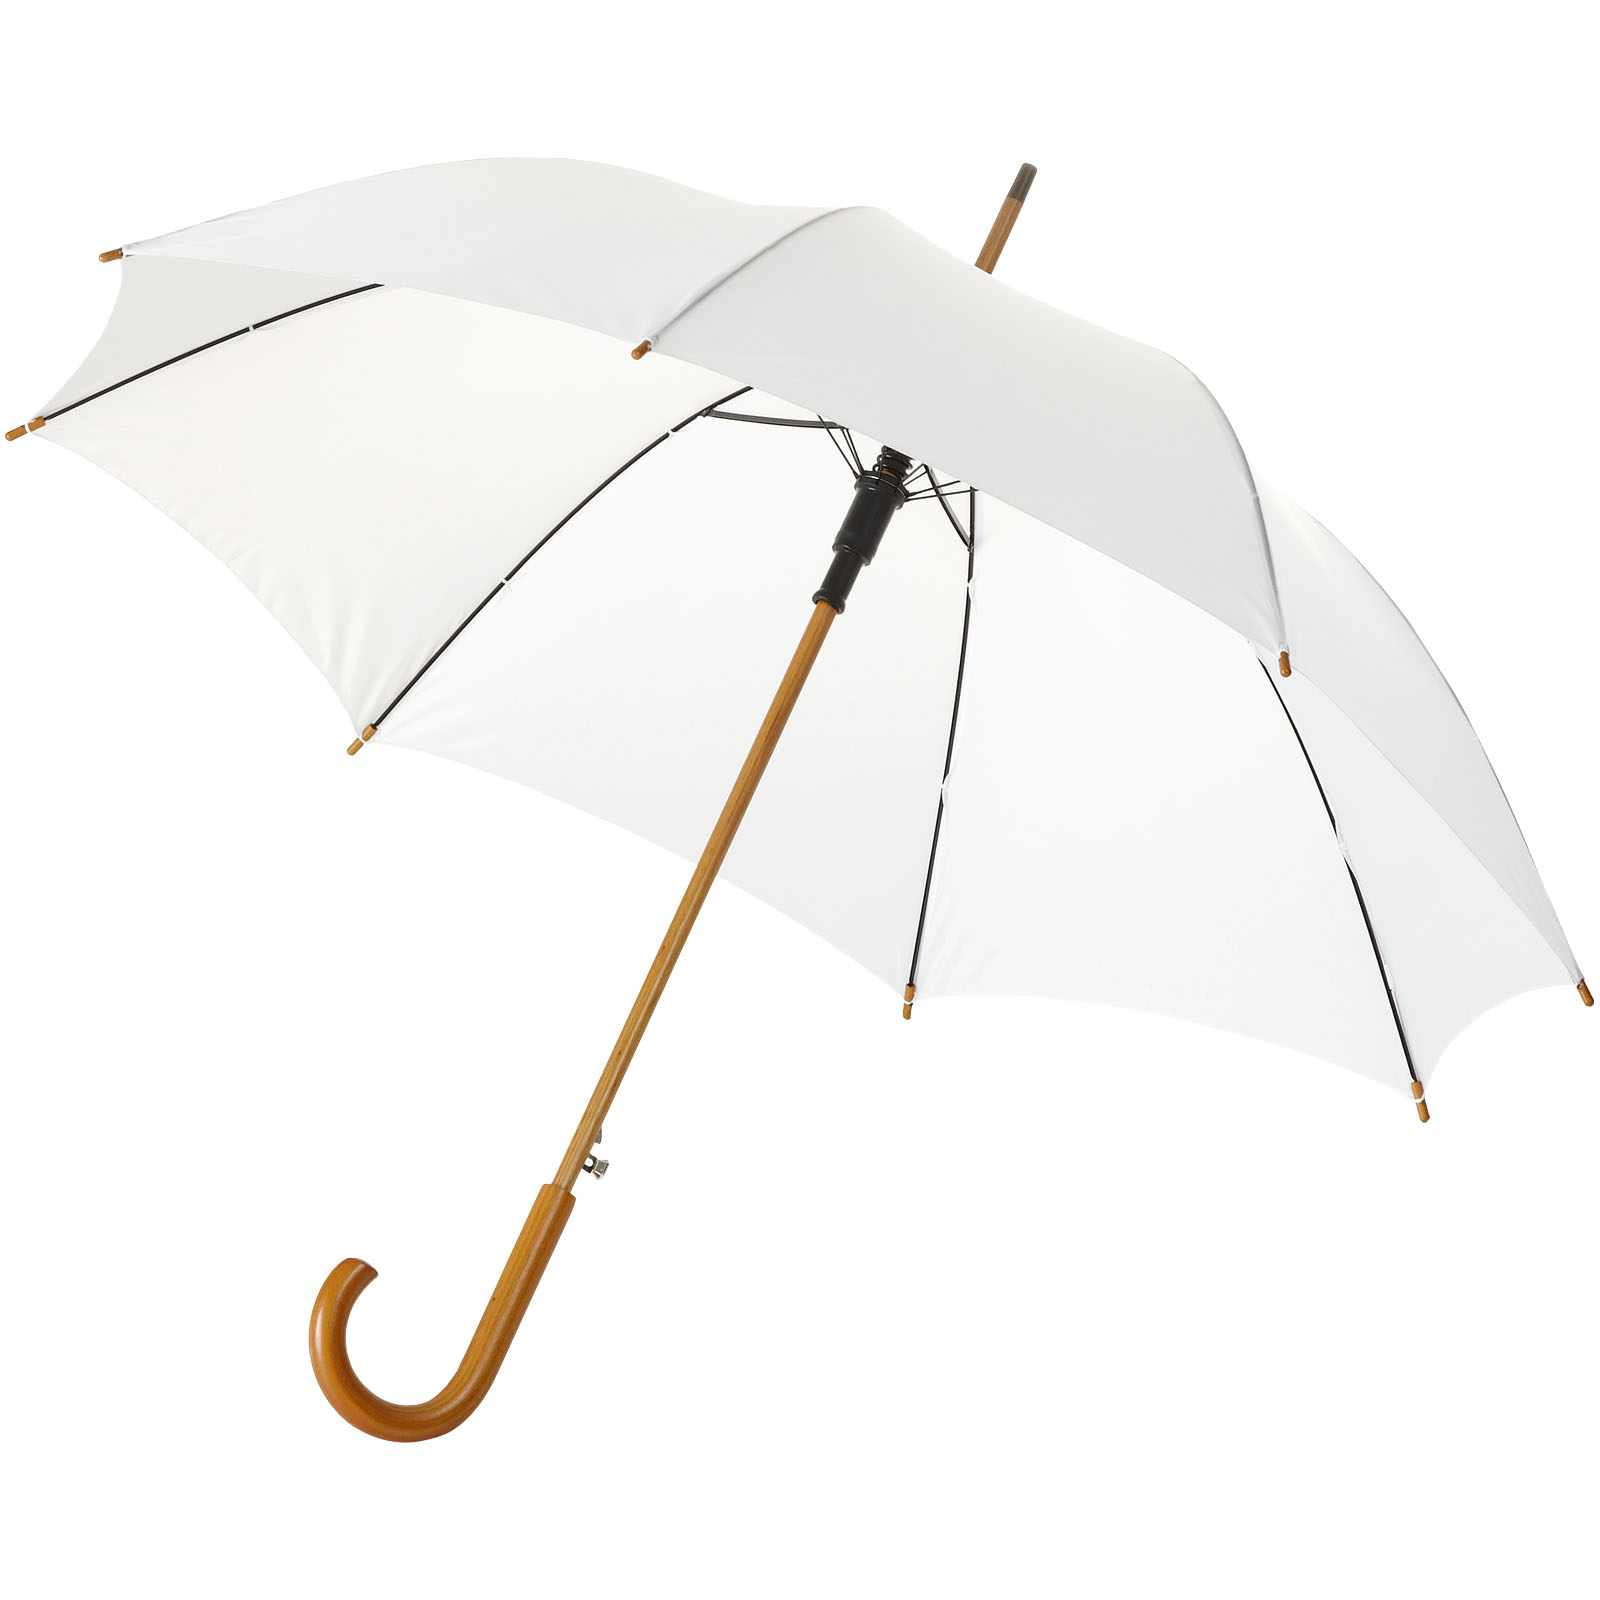 Parapluies standard - Parapluie 23